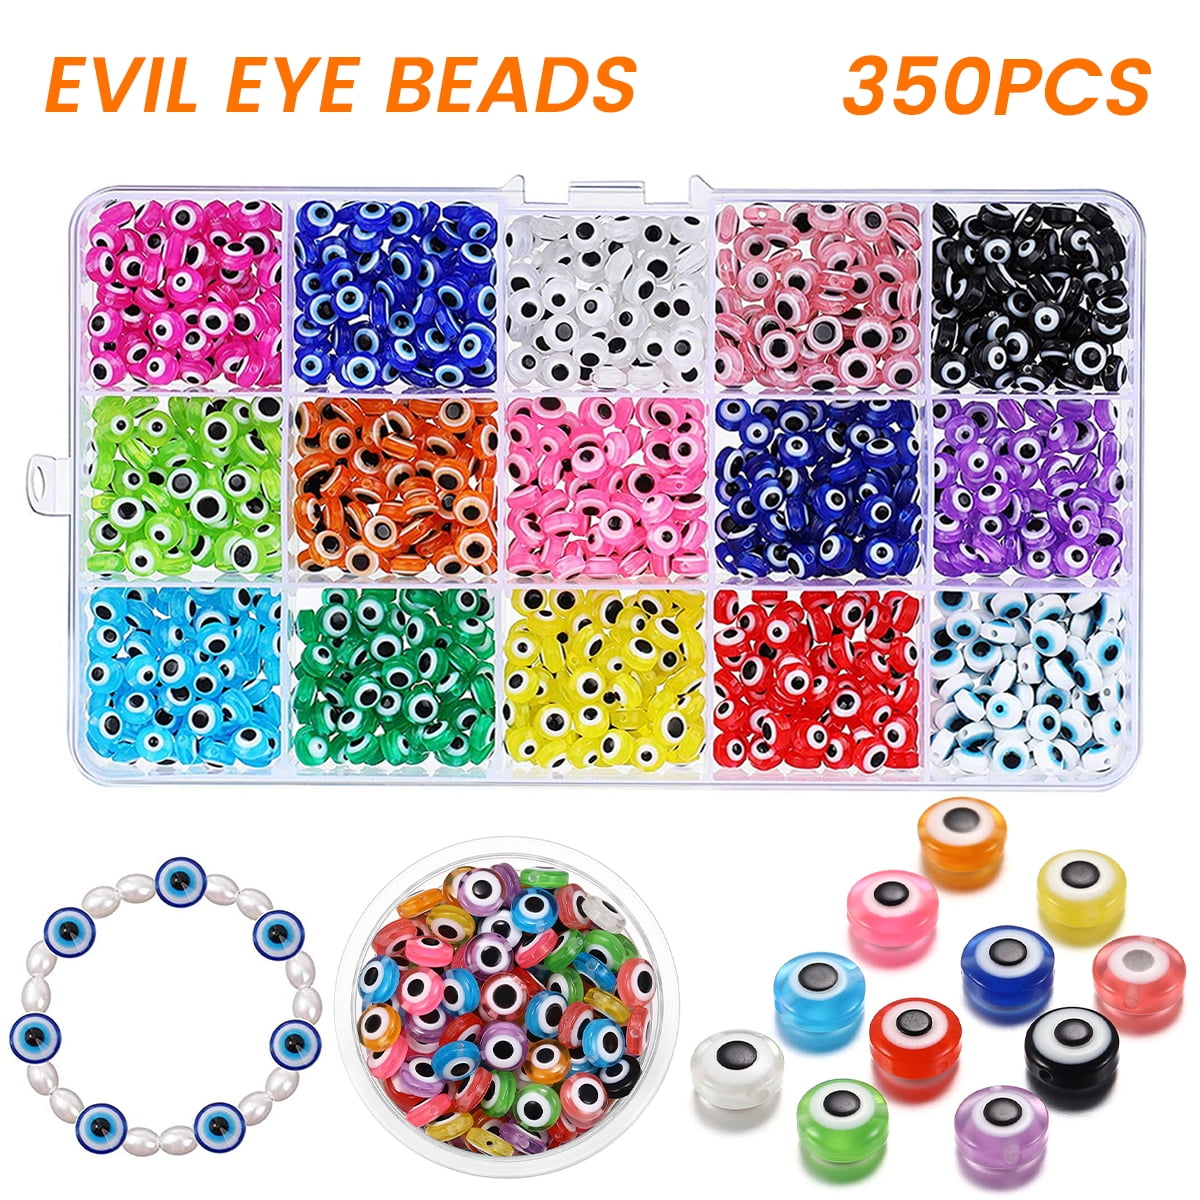 100pcs/Lot Flat Round Evil Eye Beads For Bracelets Making Mixed